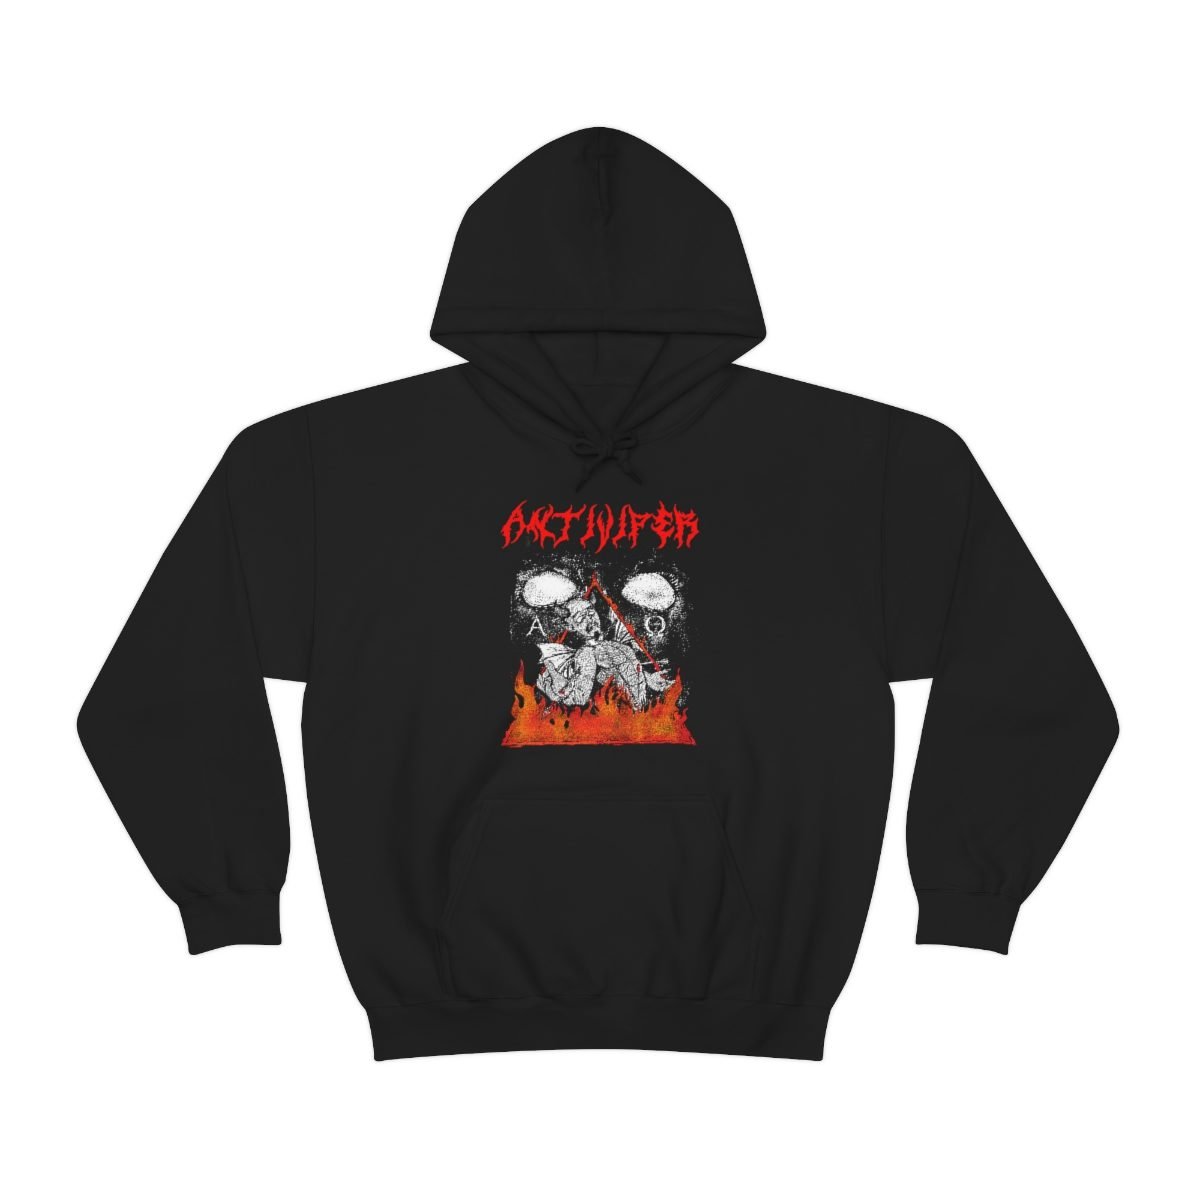 Antiviper – Incinerate The Fallen One Pullover Hooded Sweatshirt